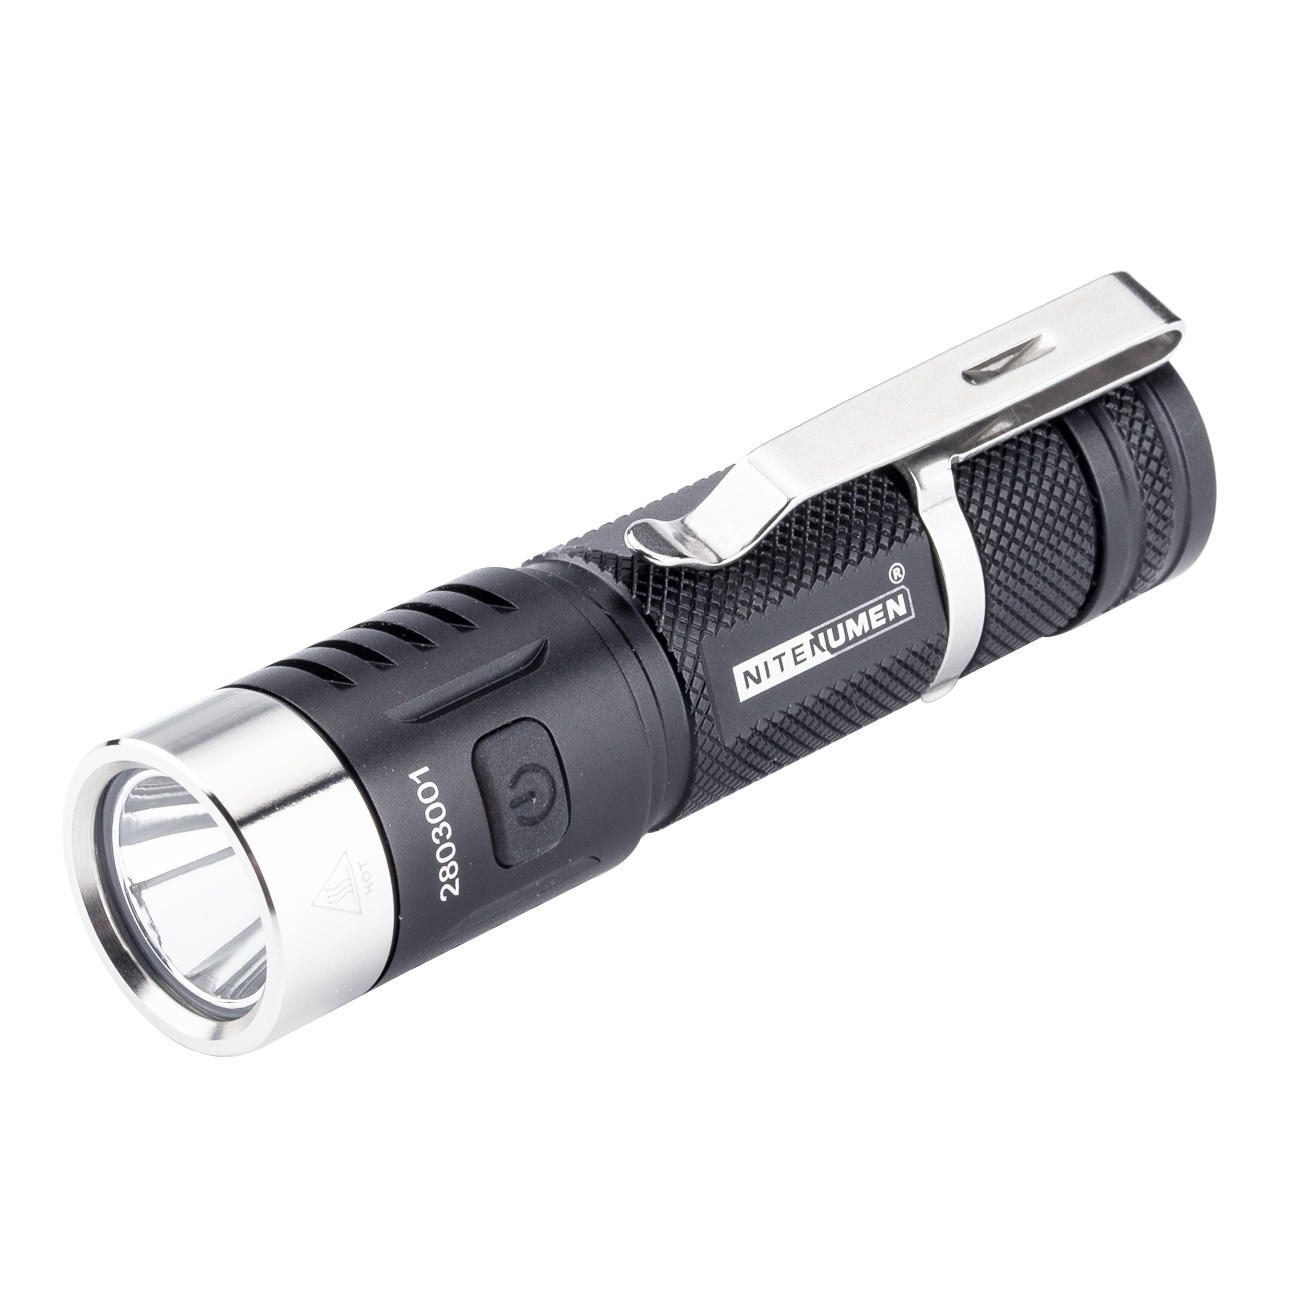 

NITENUMEN X1 L2 U2 850Lumens 5Modes USB Rechargeable Brightness EDC LED Flashlight